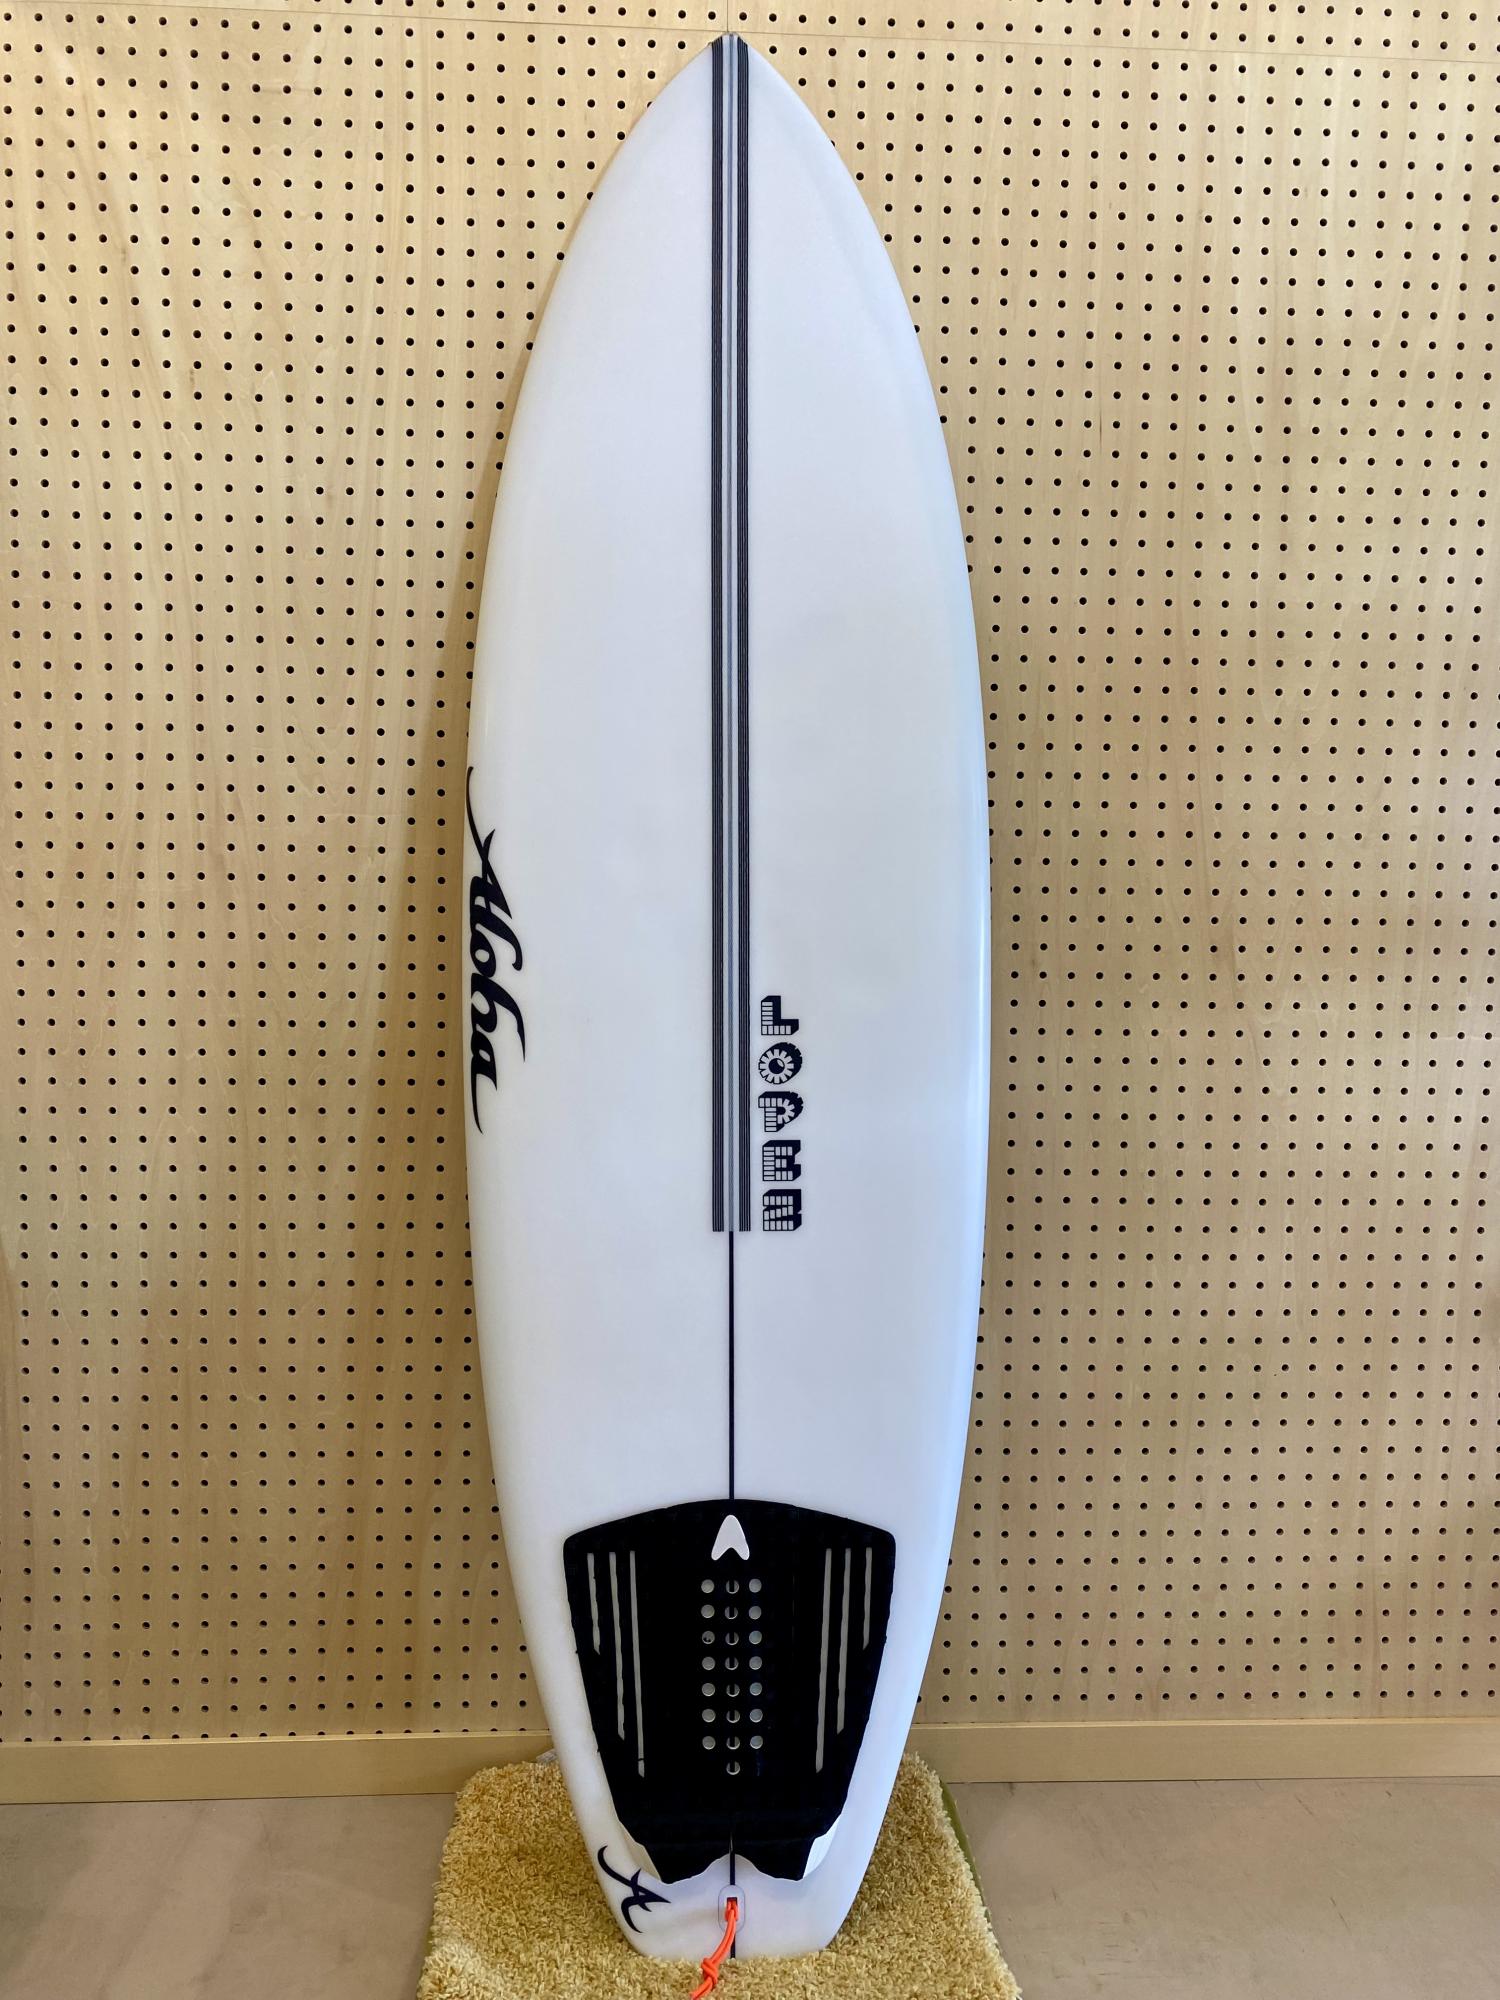 USED BOARDS (FIREWIRE SURFBOARDS BAKED POTATO 5.1)